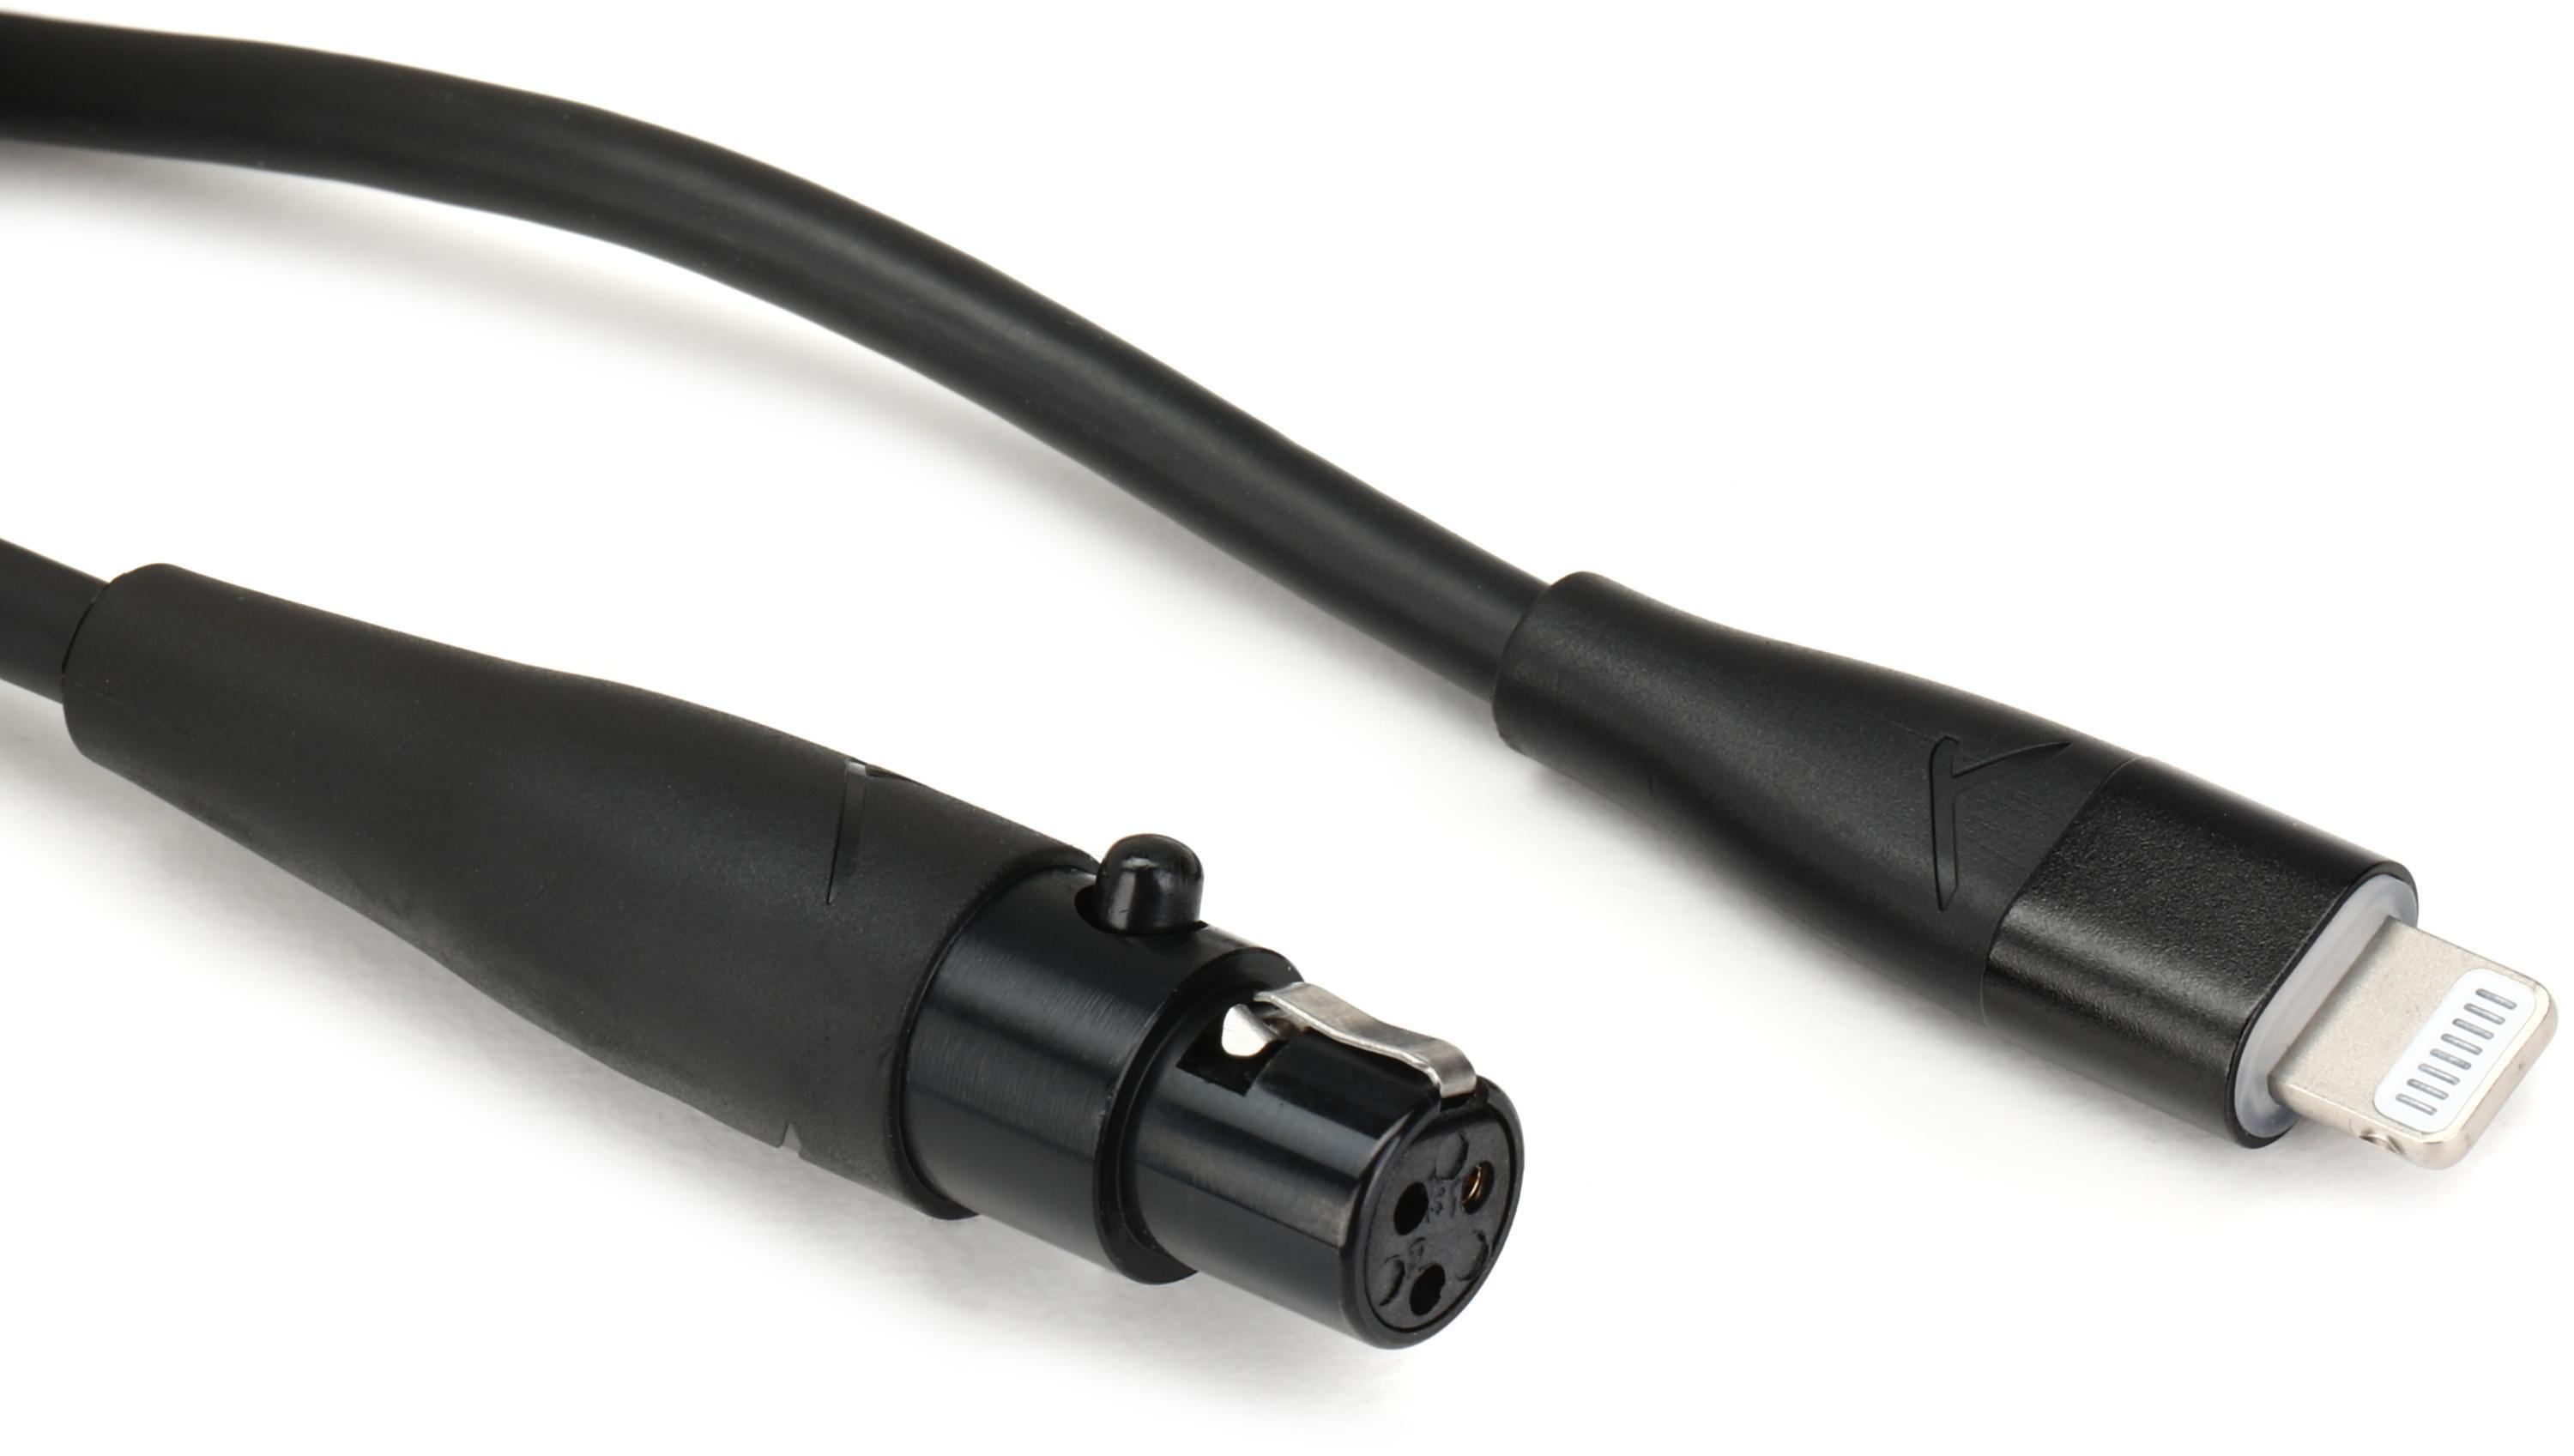 Beyerdynamic Pro X USB-C Headphone Cable - 1.6 meter